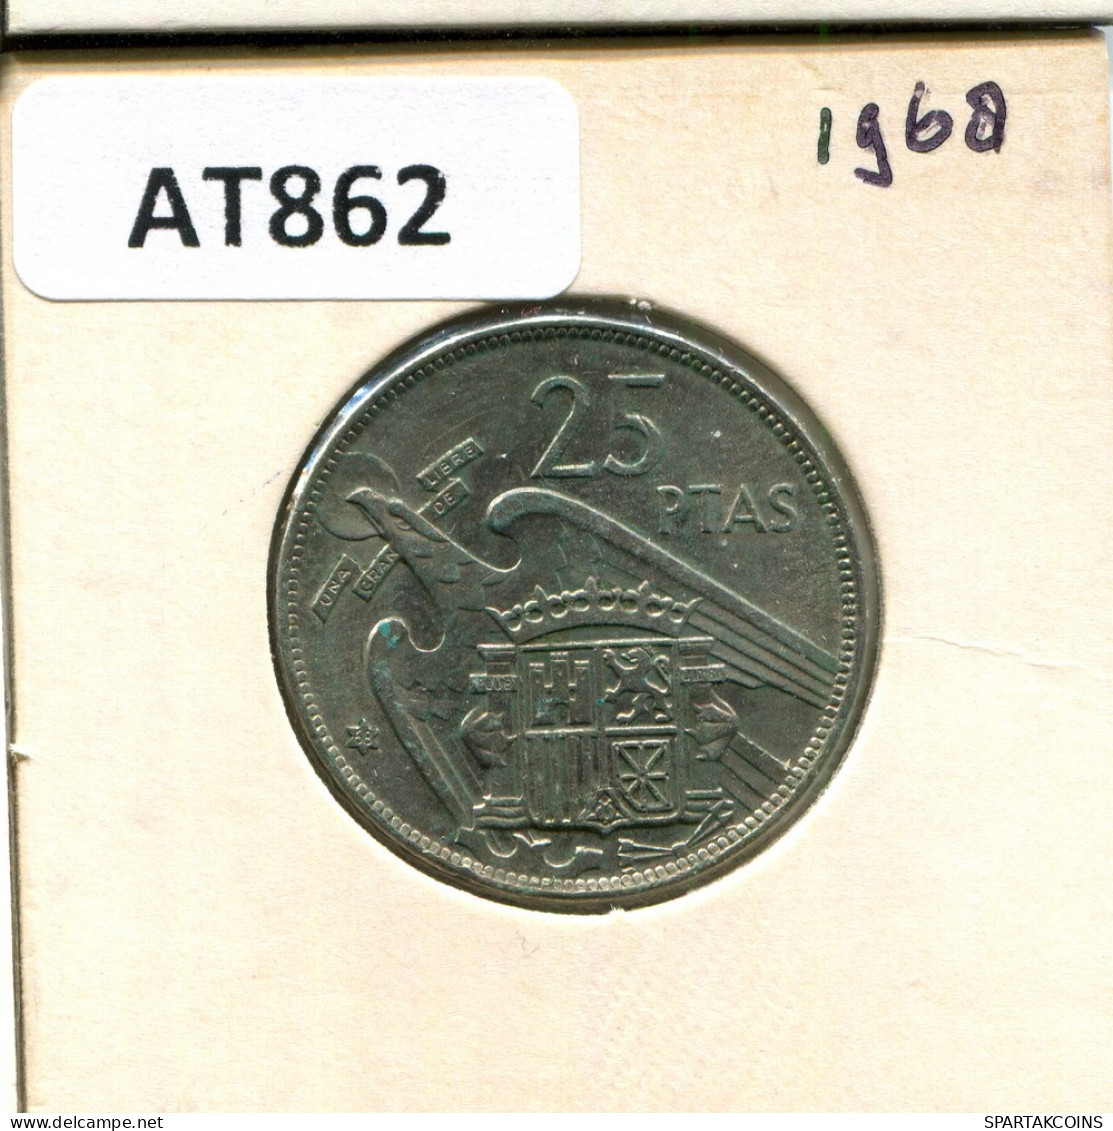 25 PESETAS 1968 SPANIEN SPAIN Münze #AT862.D - 25 Pesetas